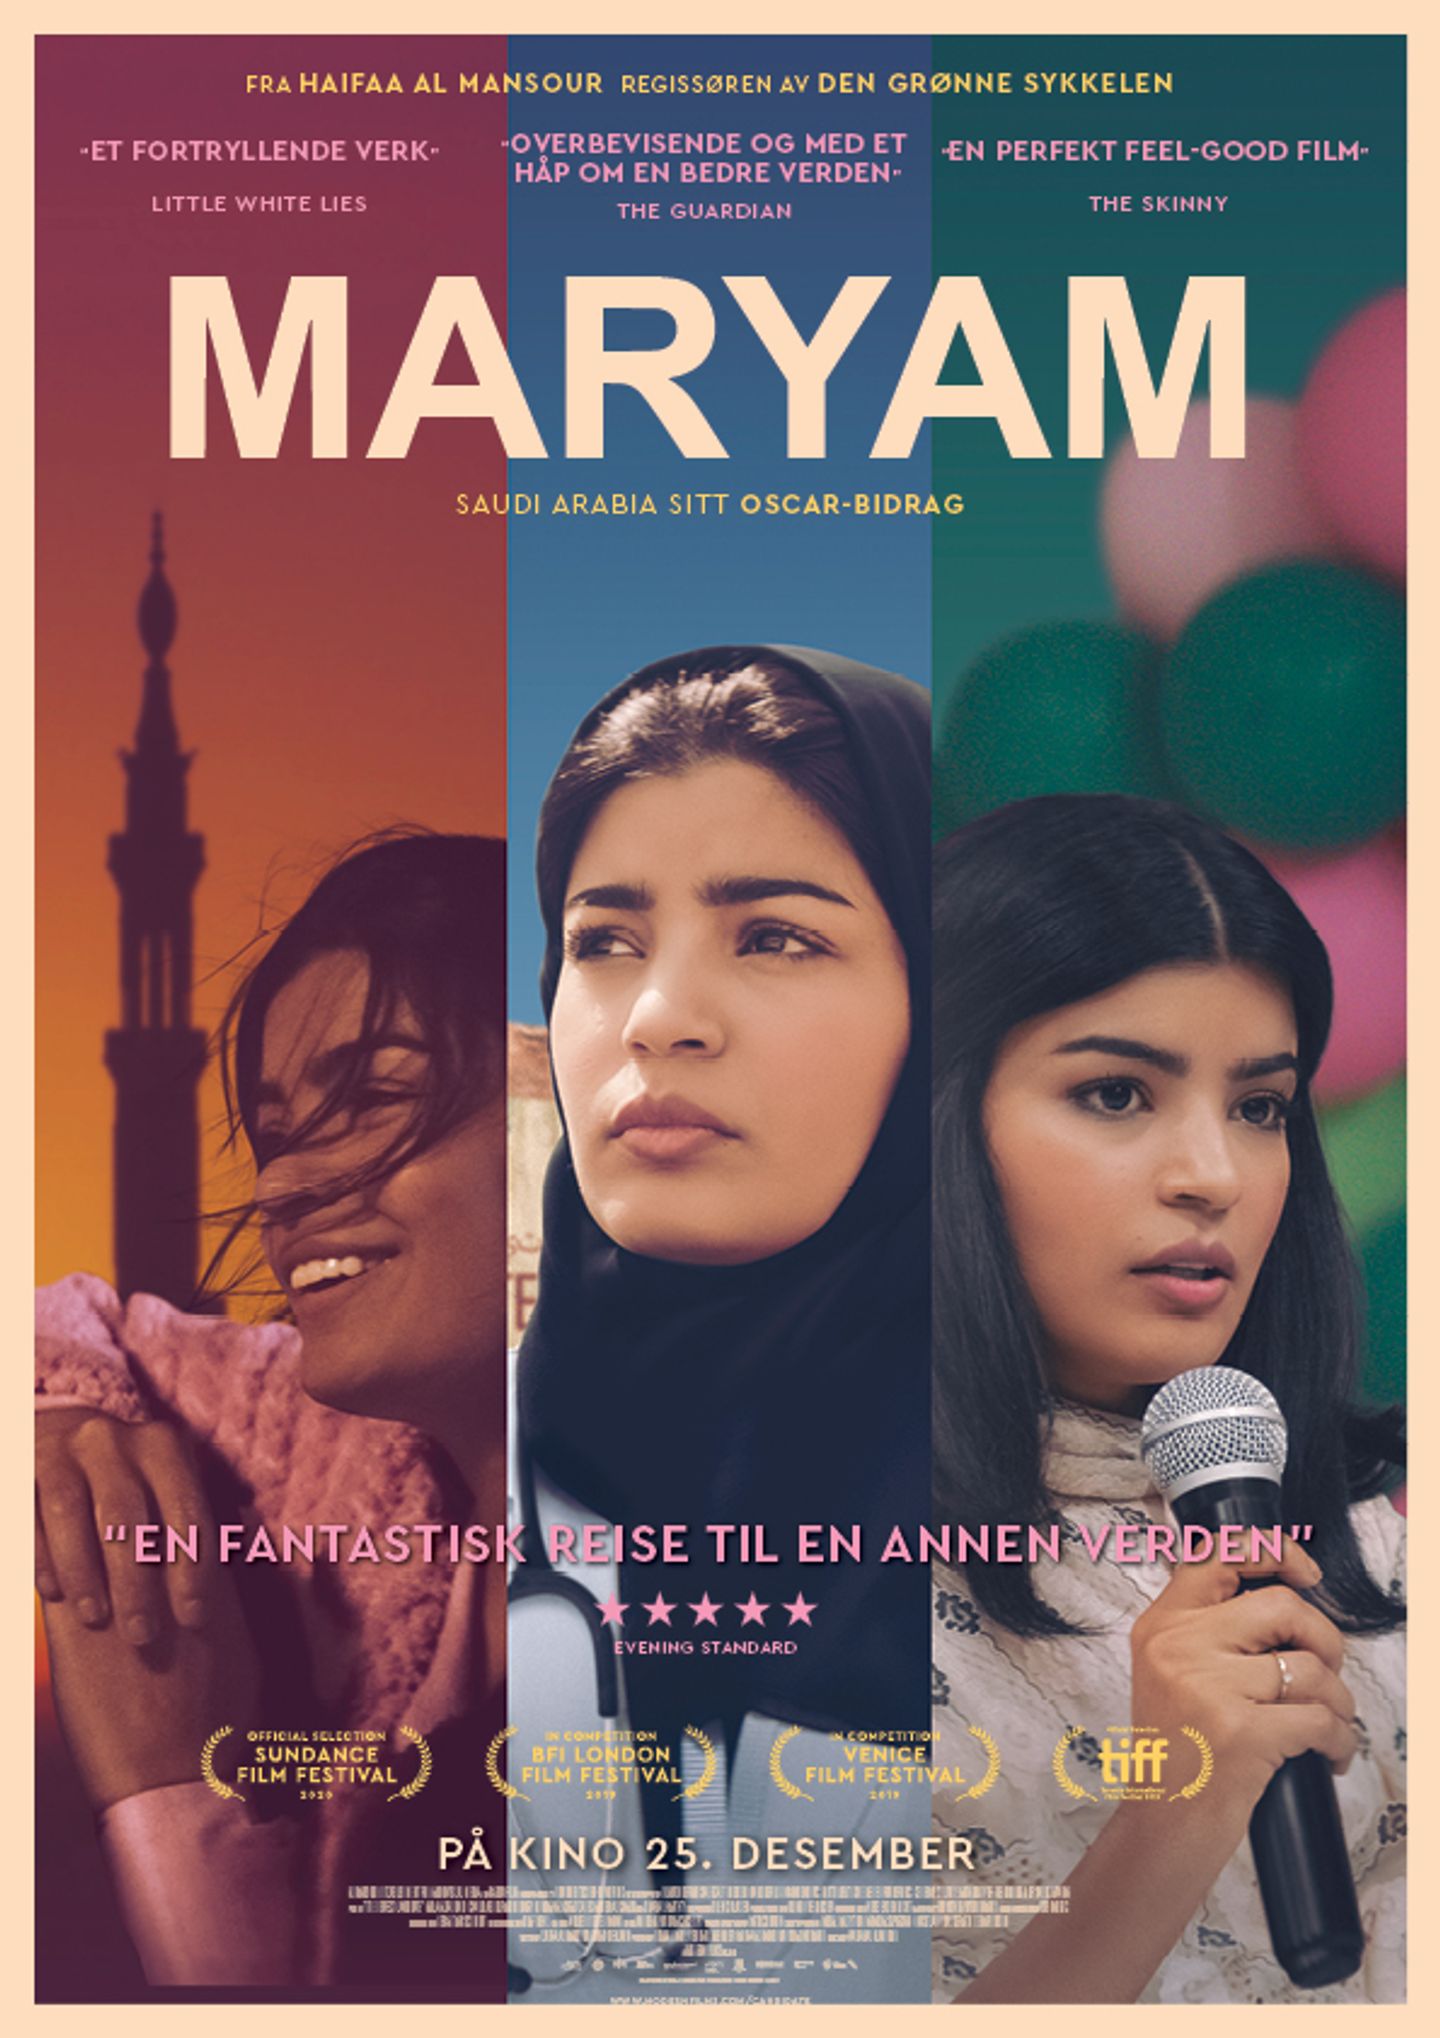 Plakat for 'Maryam'